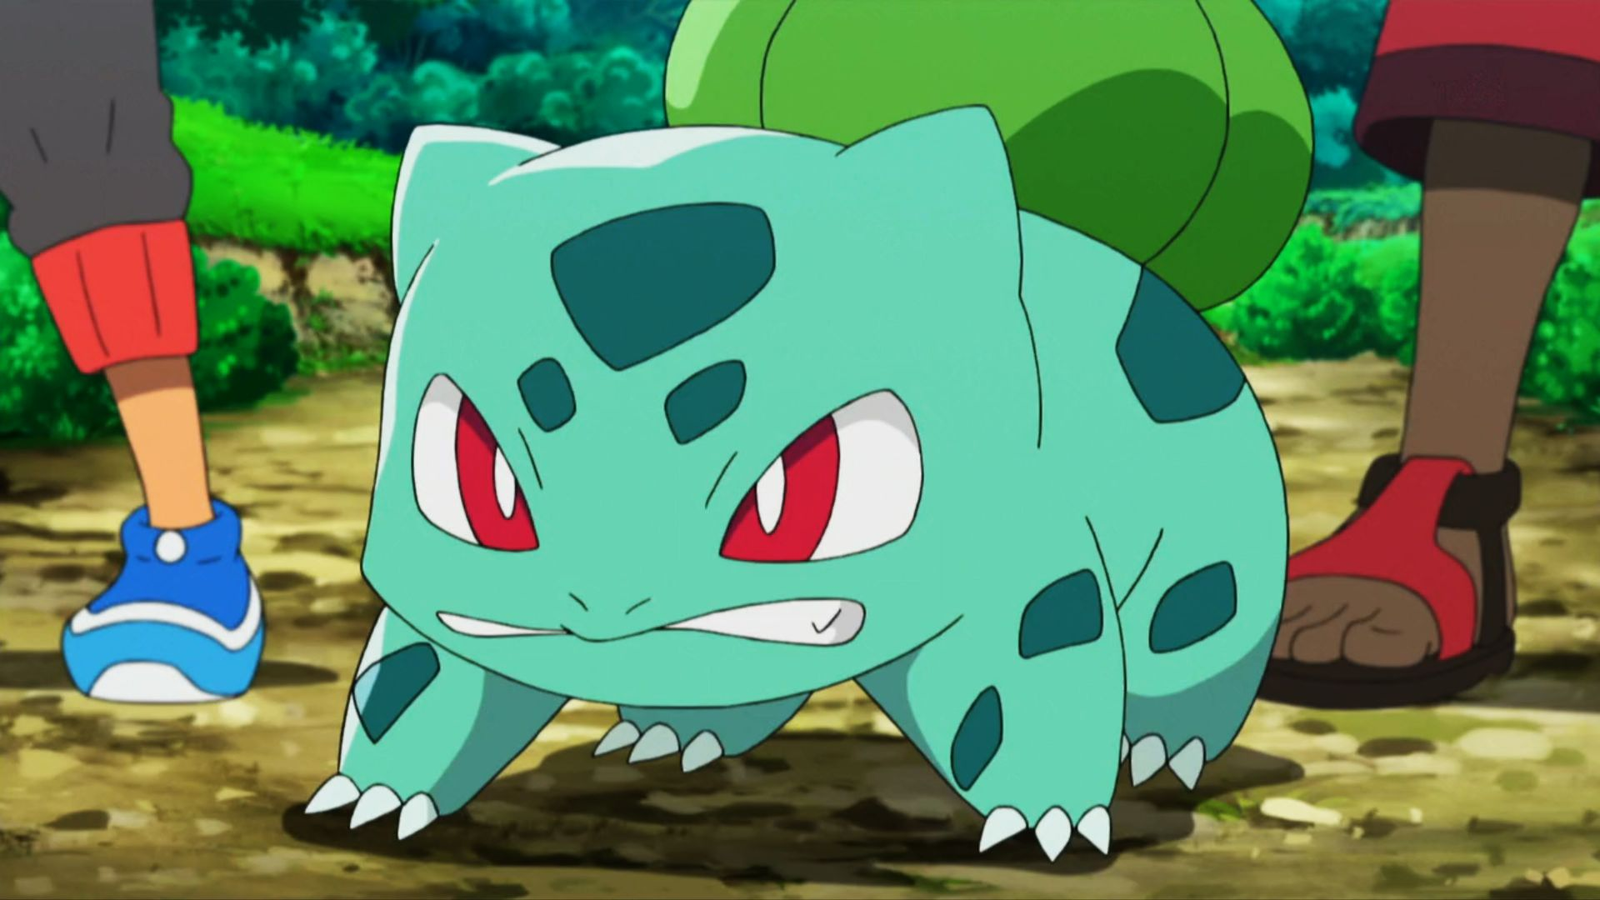 Pokémon Go' Community Day: Shiny Bulbasaur, Start Time and